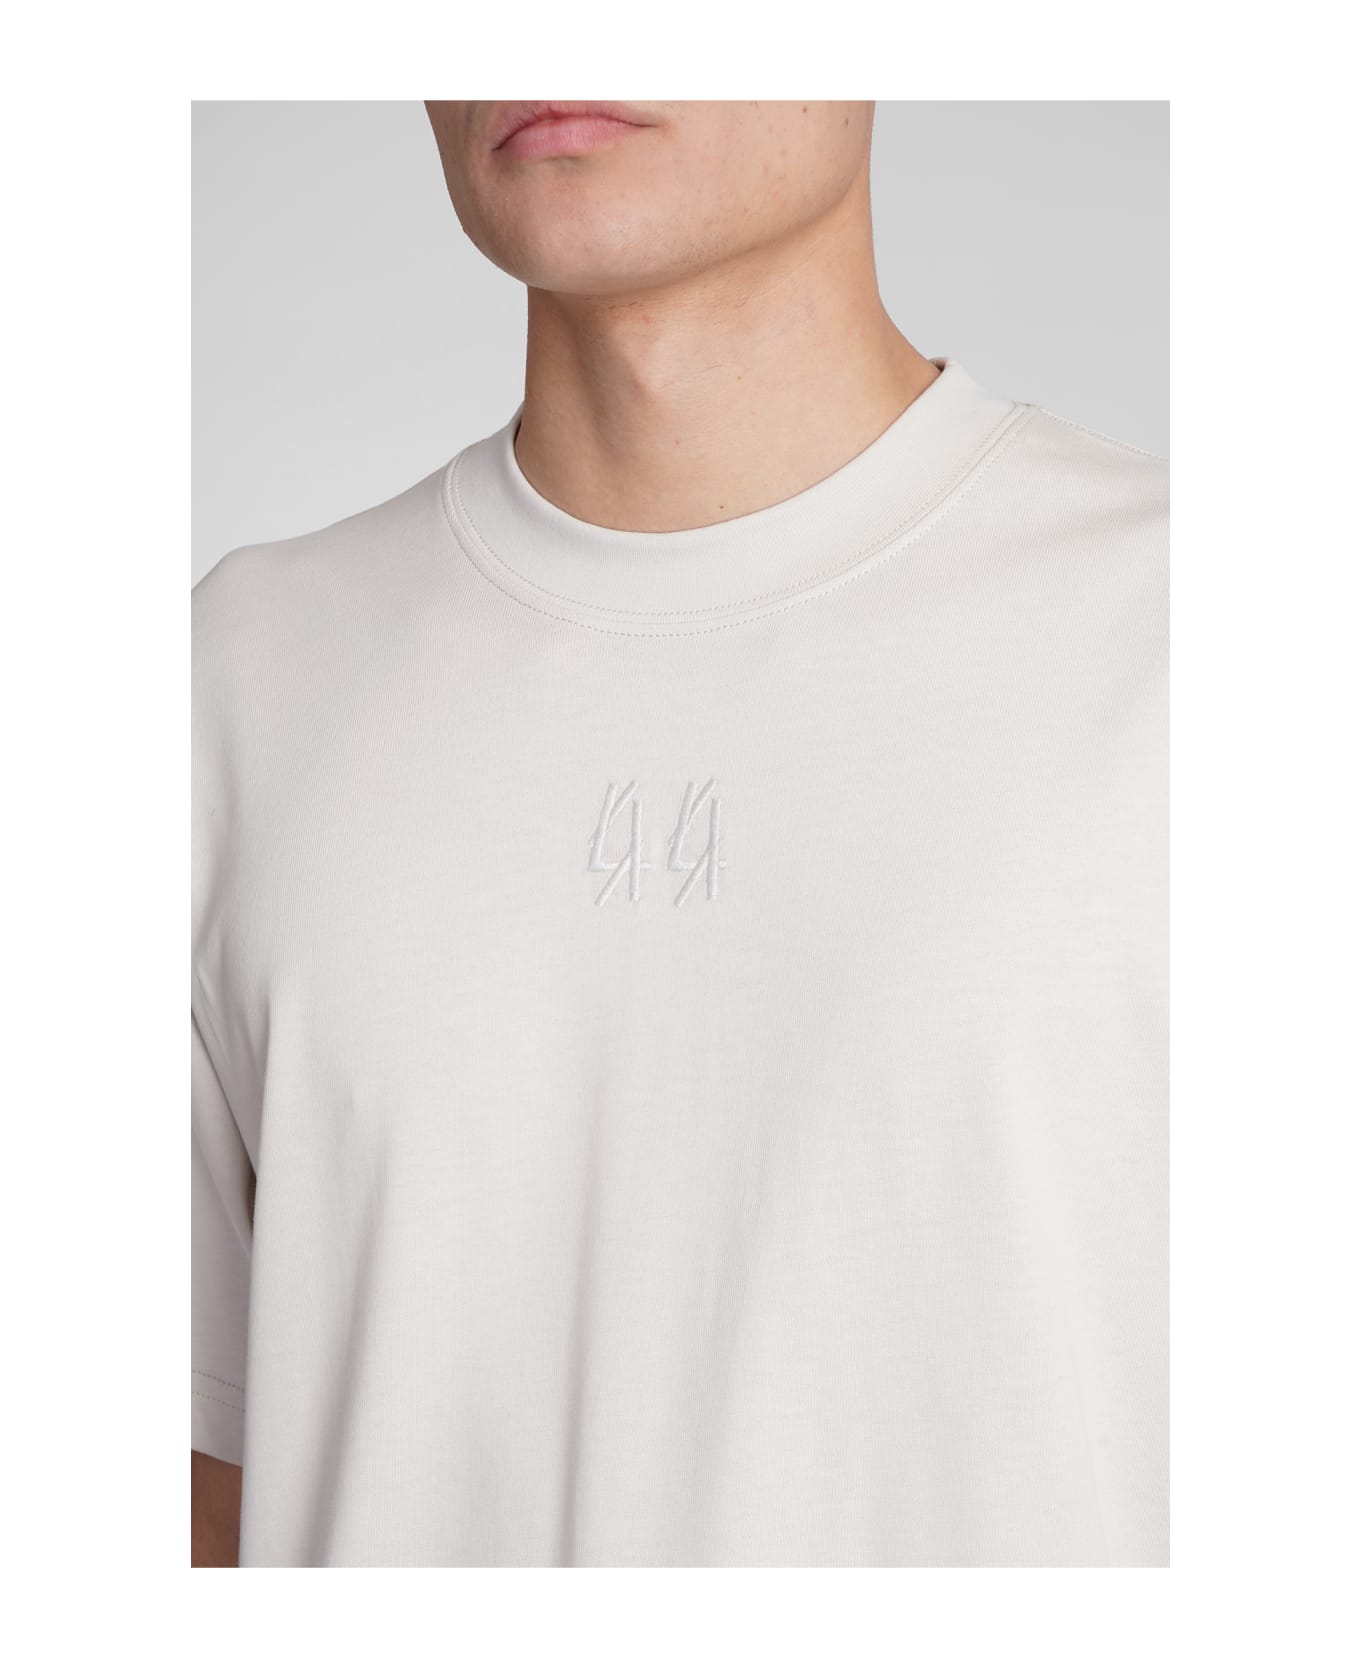 44 Label Group T-shirt In Beige Cotton - beige シャツ